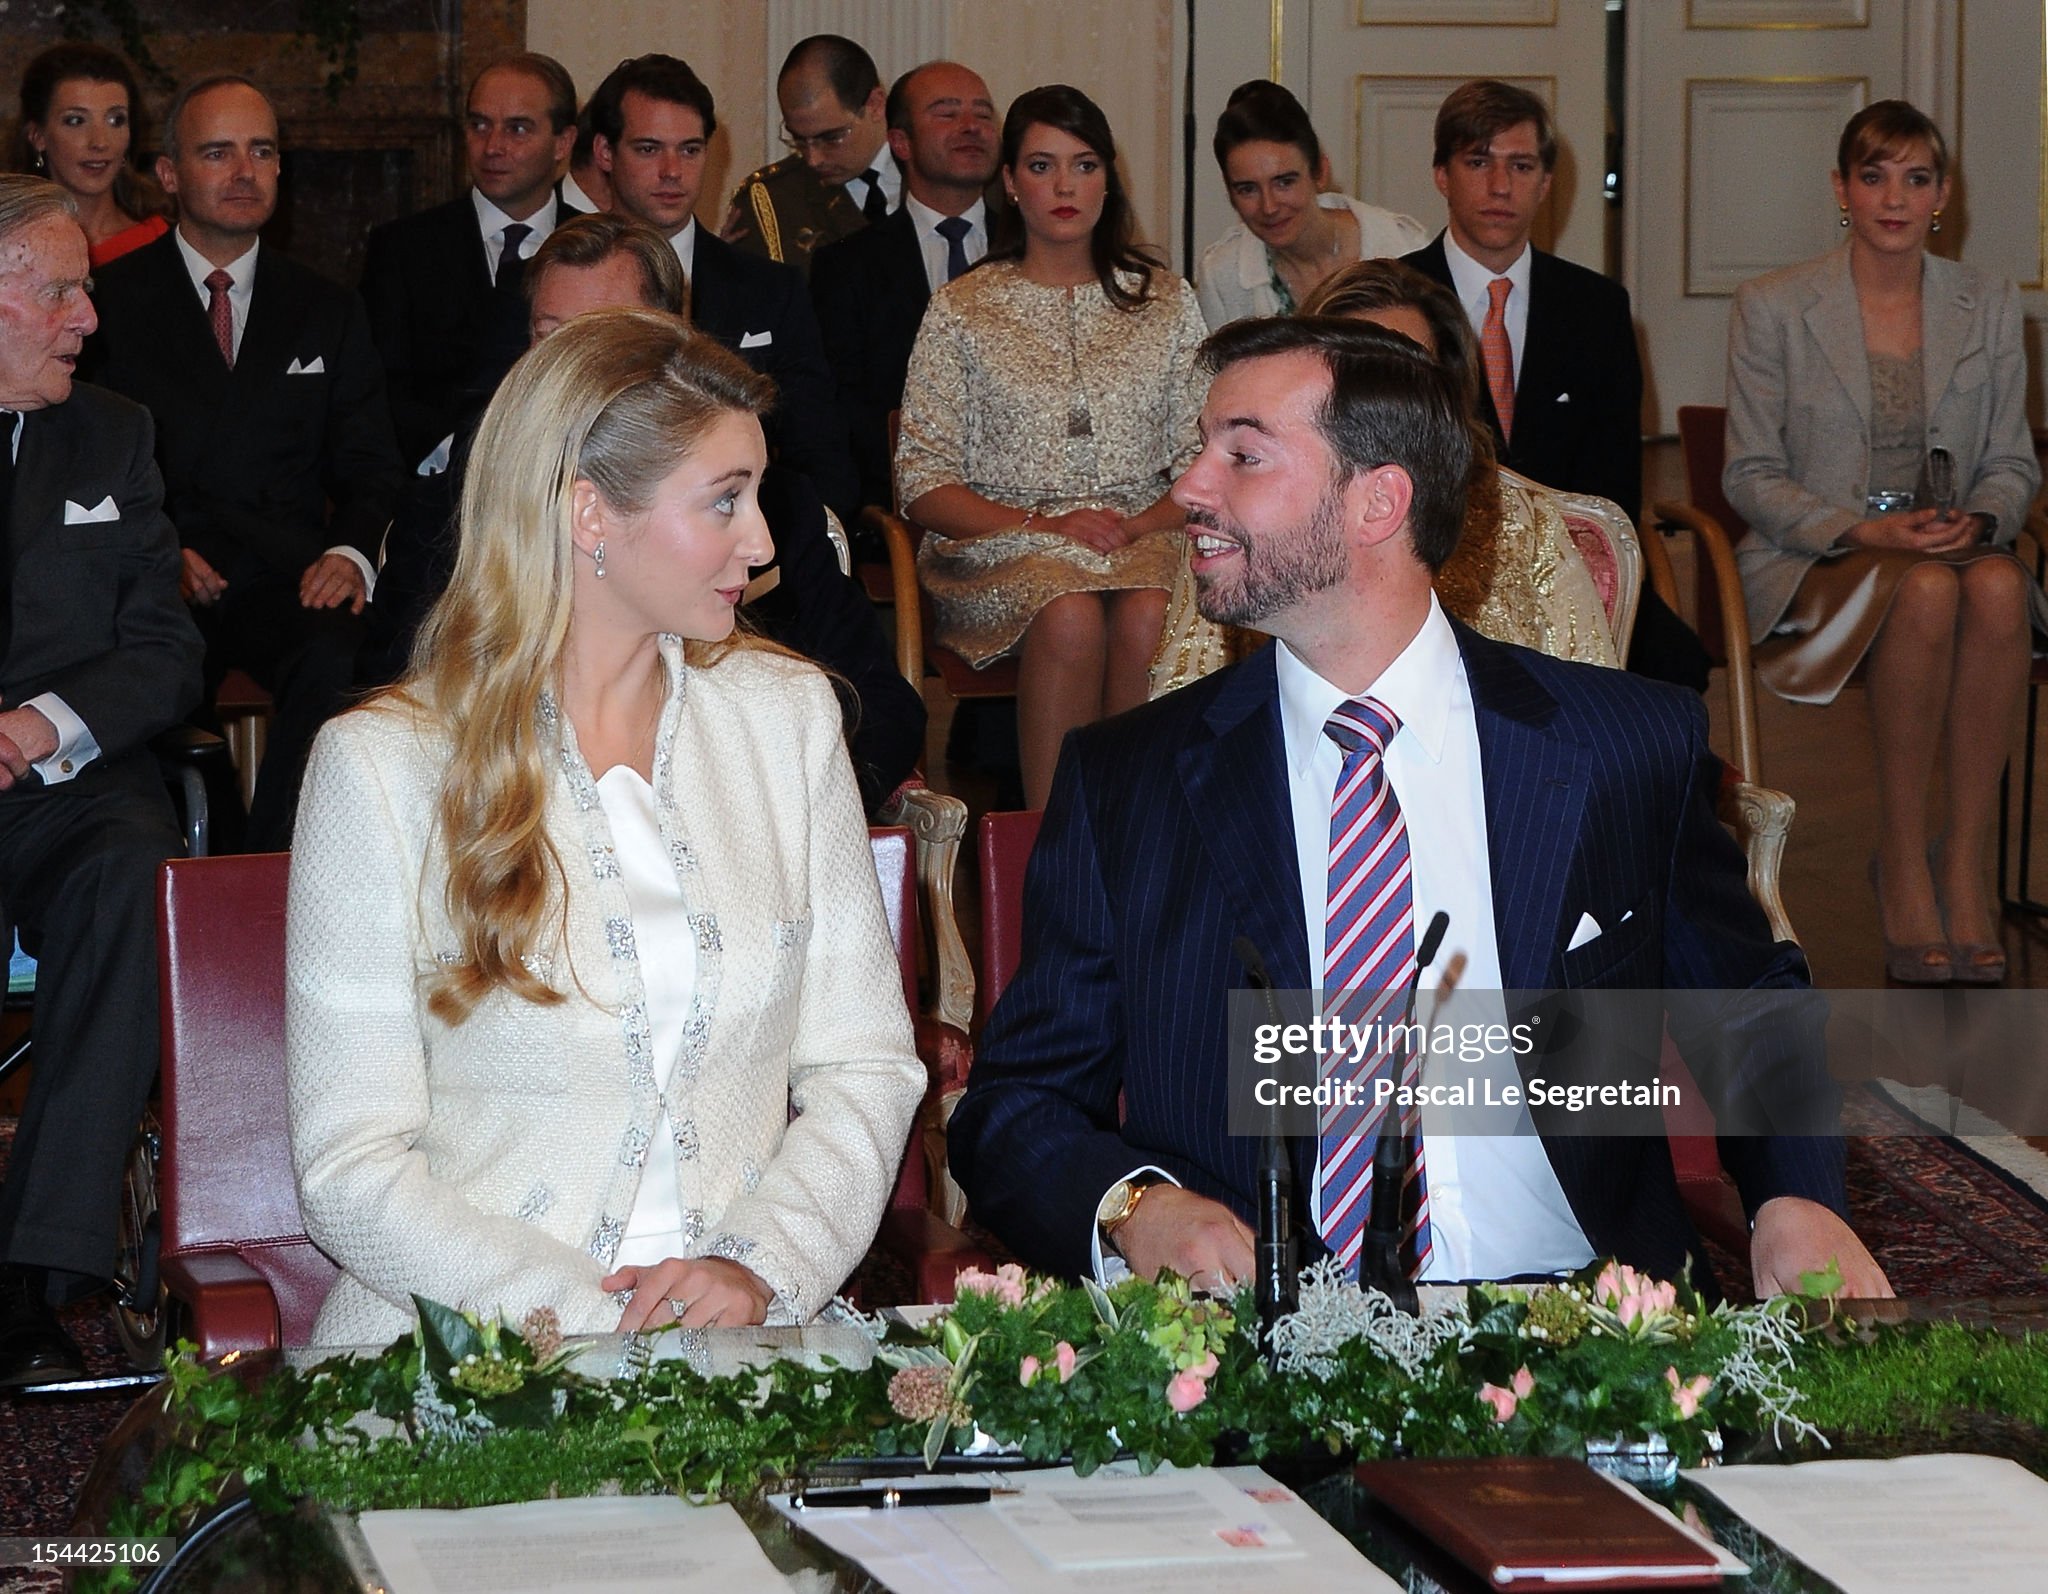 the-wedding-of-prince-guillaume-of-luxembourg-stephanie-de-lannoy-civil-ceremony.jpg?s=2048x2048&w=gi&k=20&c=-zdgJO9BzEgjXn0NPH0JEN9gjFgJ0QVLeSNWFT90qNM=